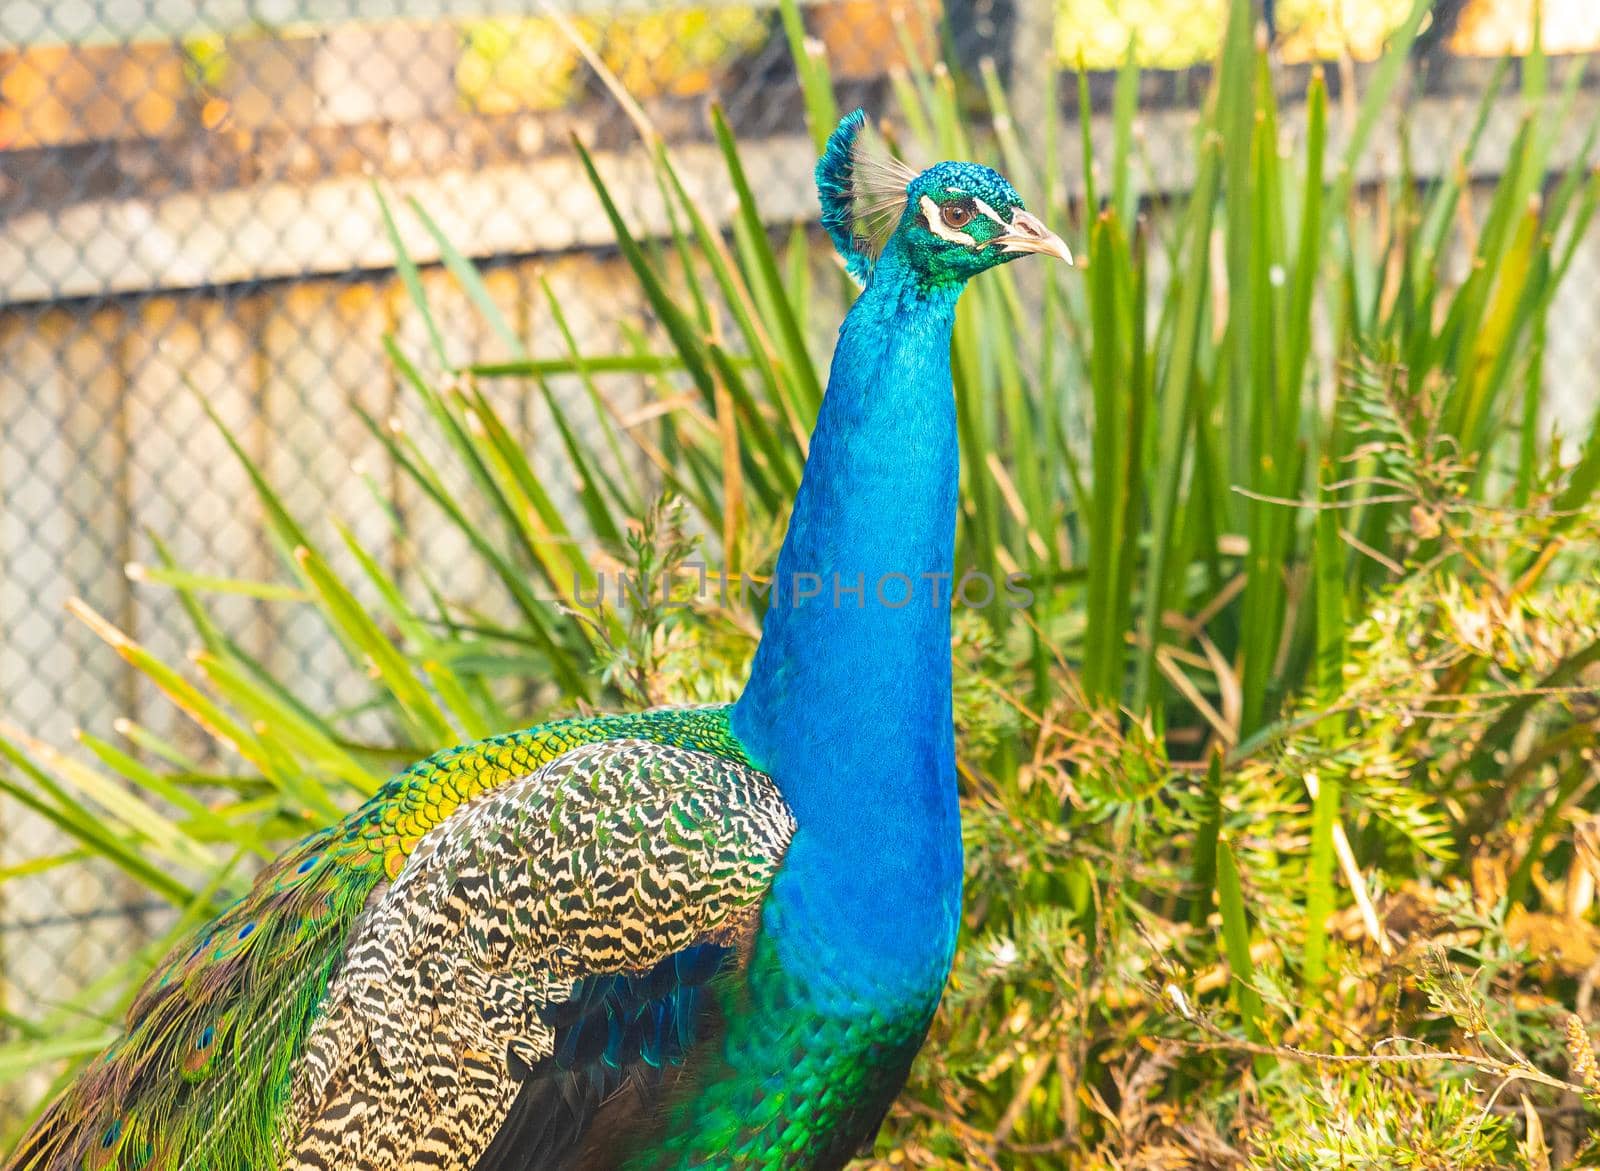 Peacock on the garden by Yagyaparajuli